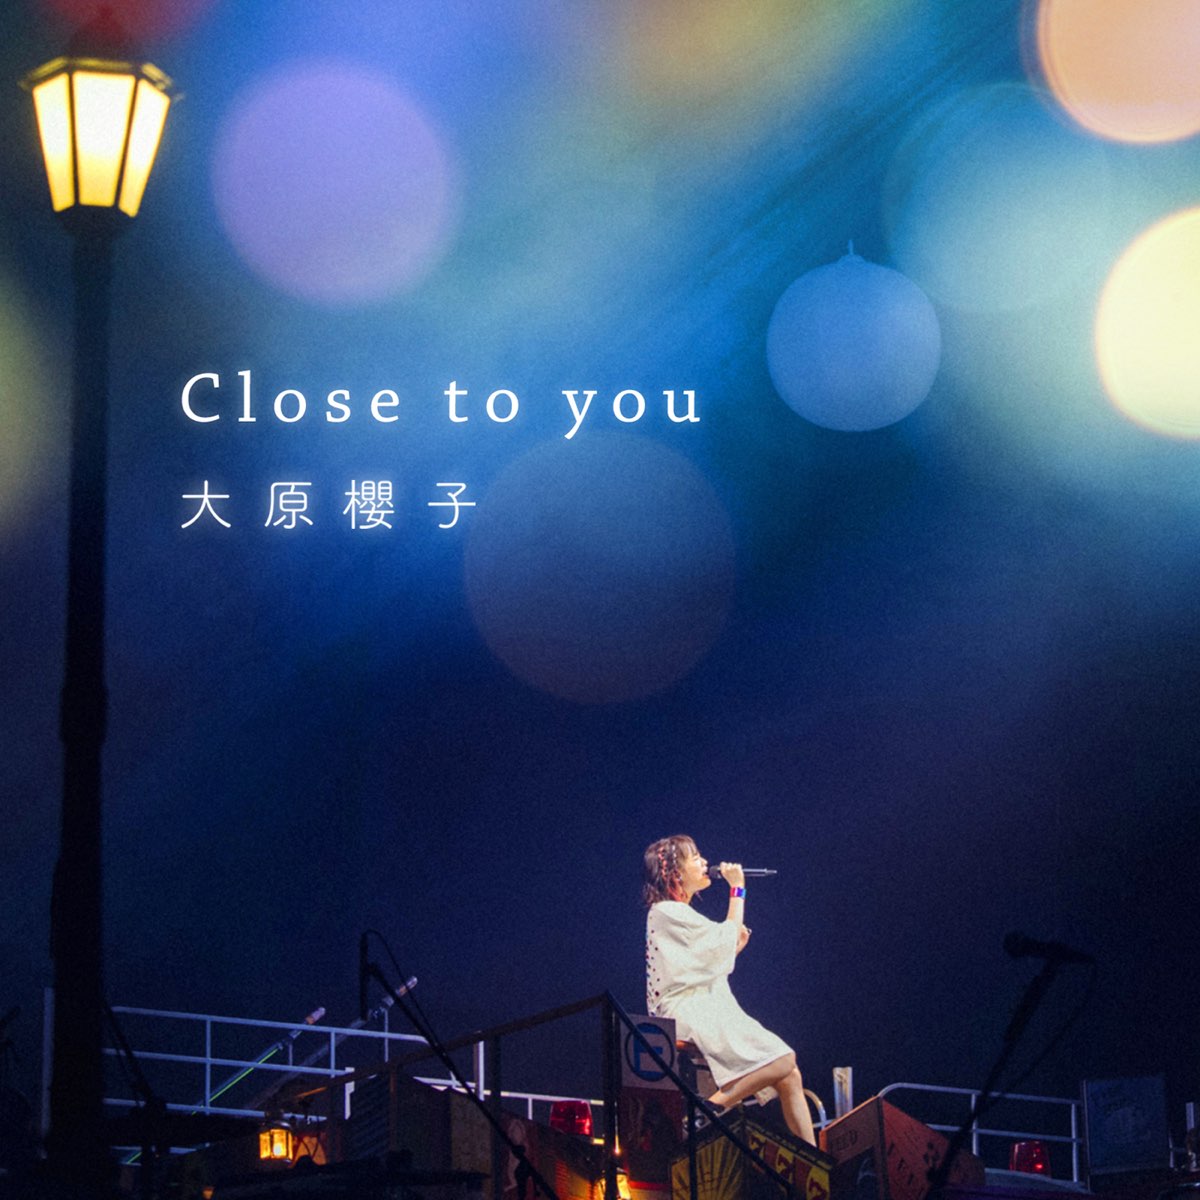 Close are песня. Картинки с песней close to you.